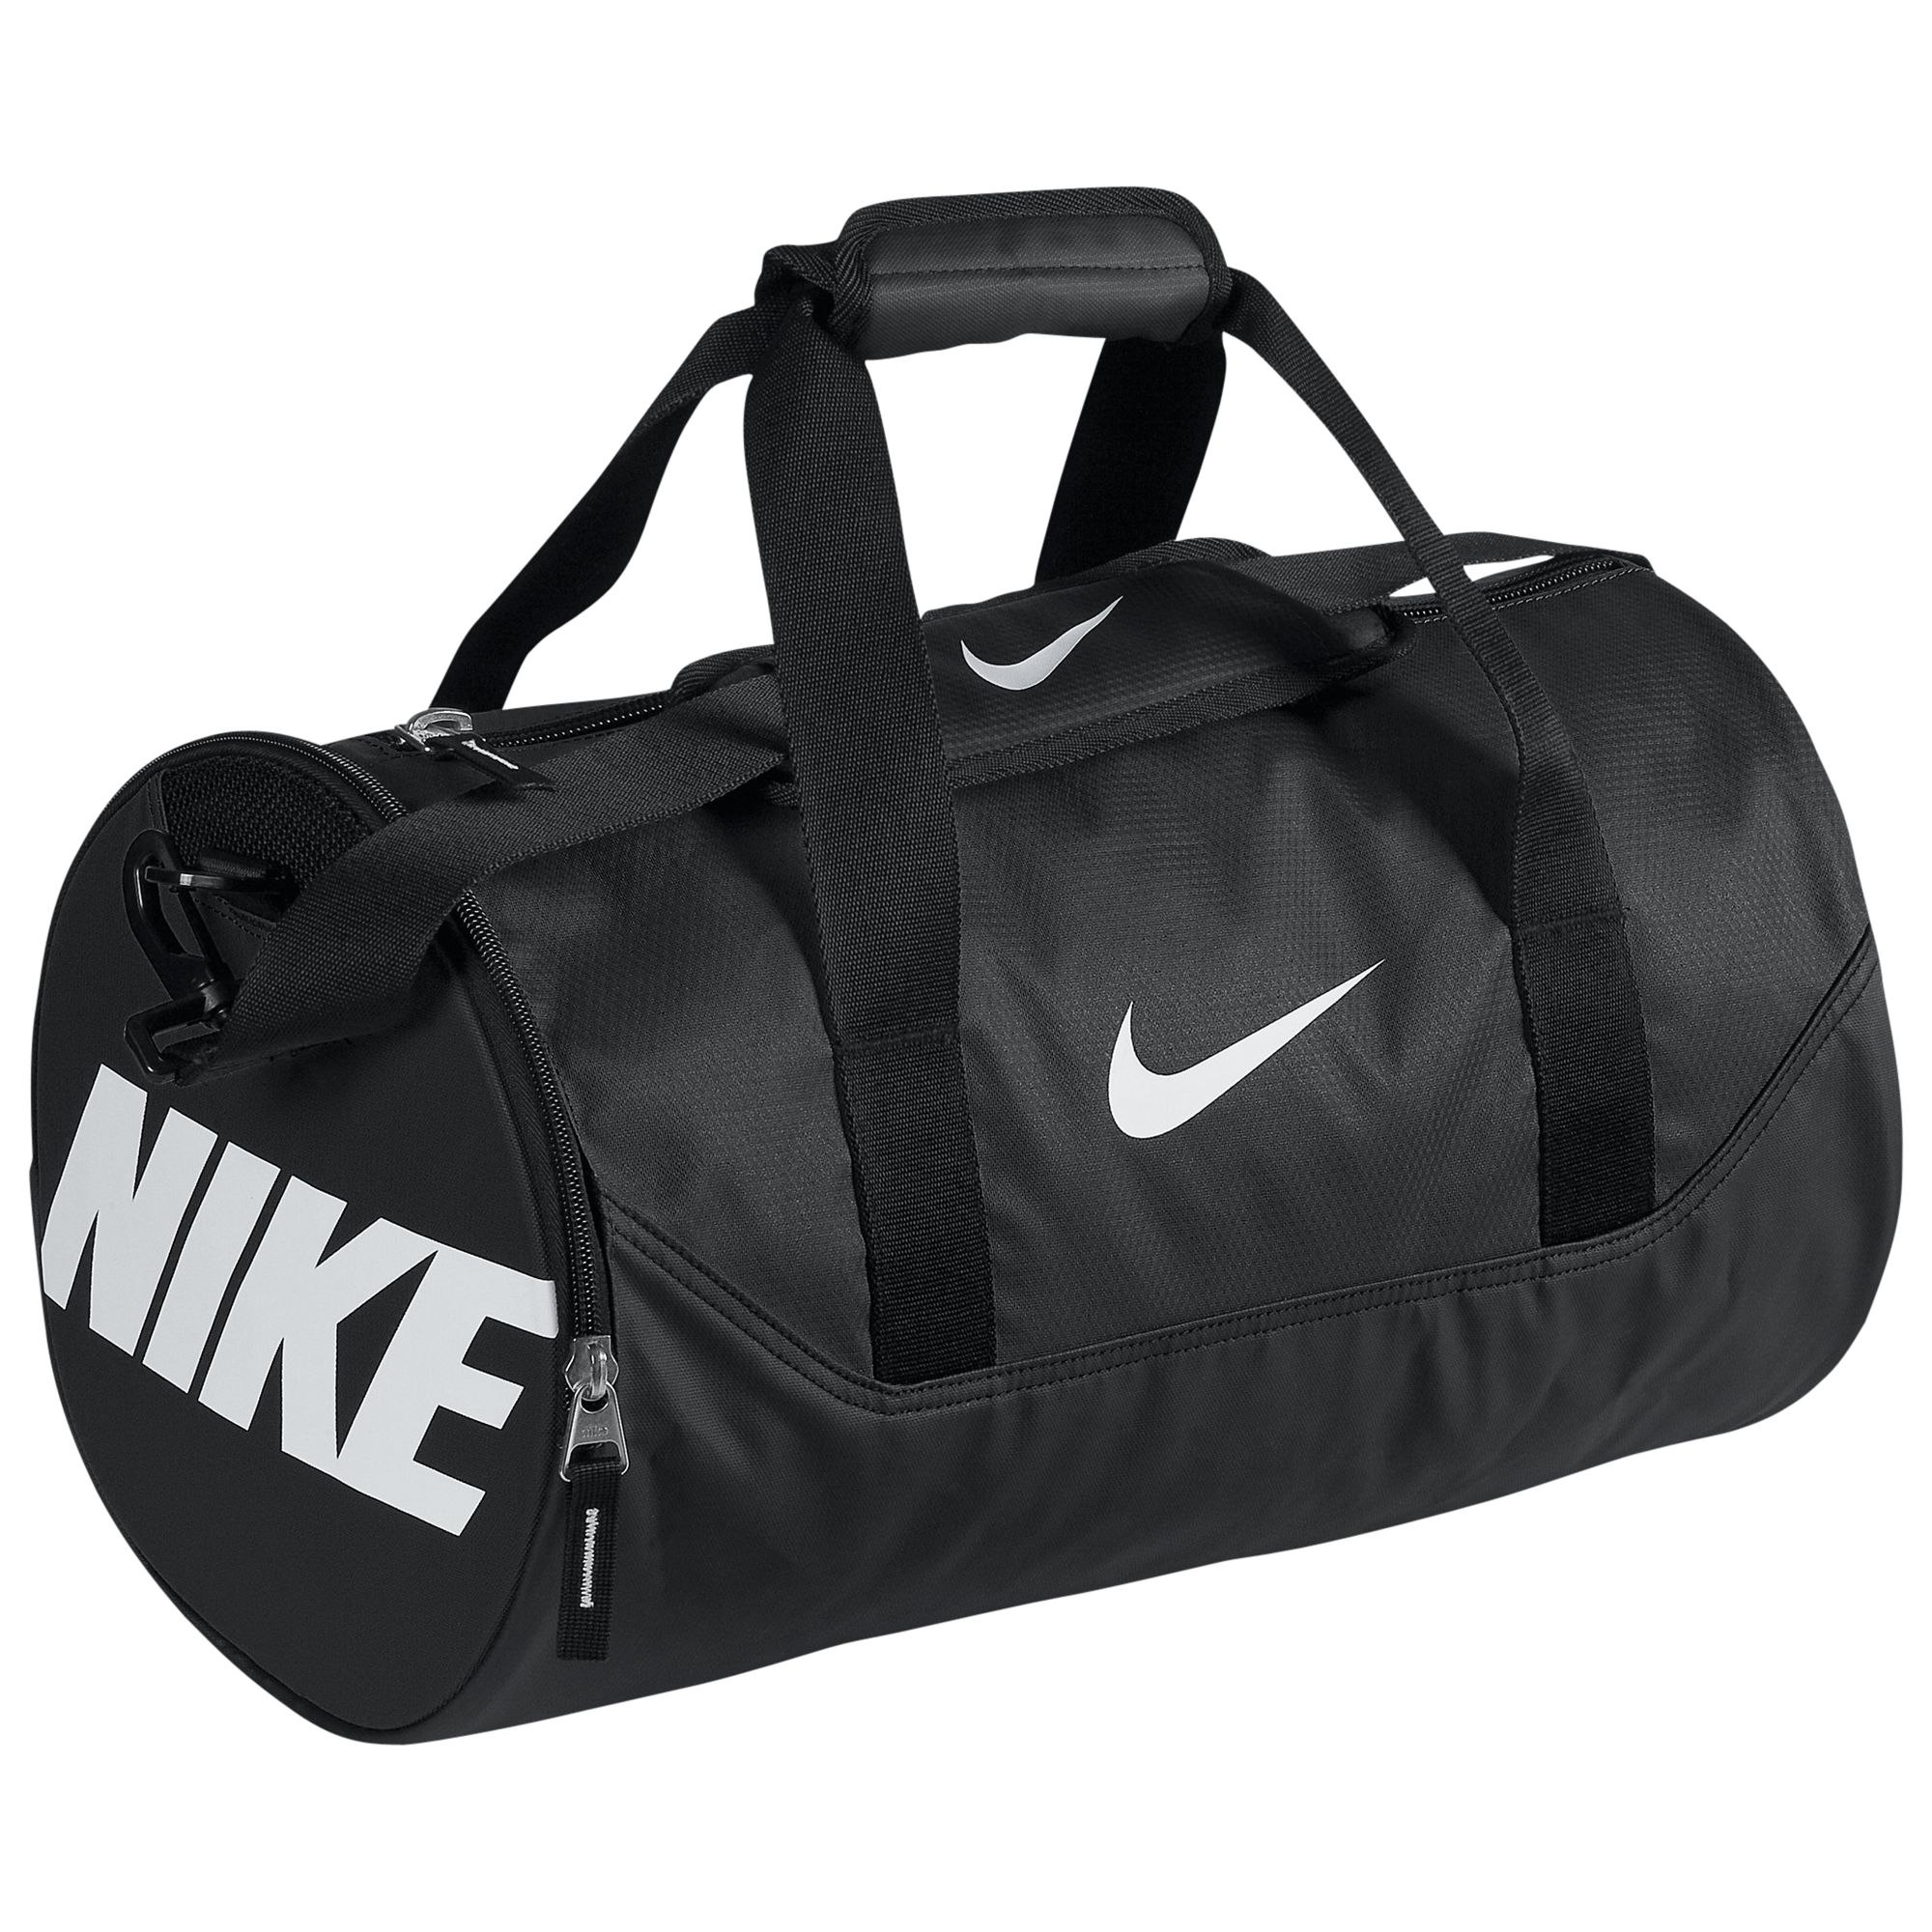 Nike Team Training Mini Duffle Bag, Black/White at John Lewis & Partners